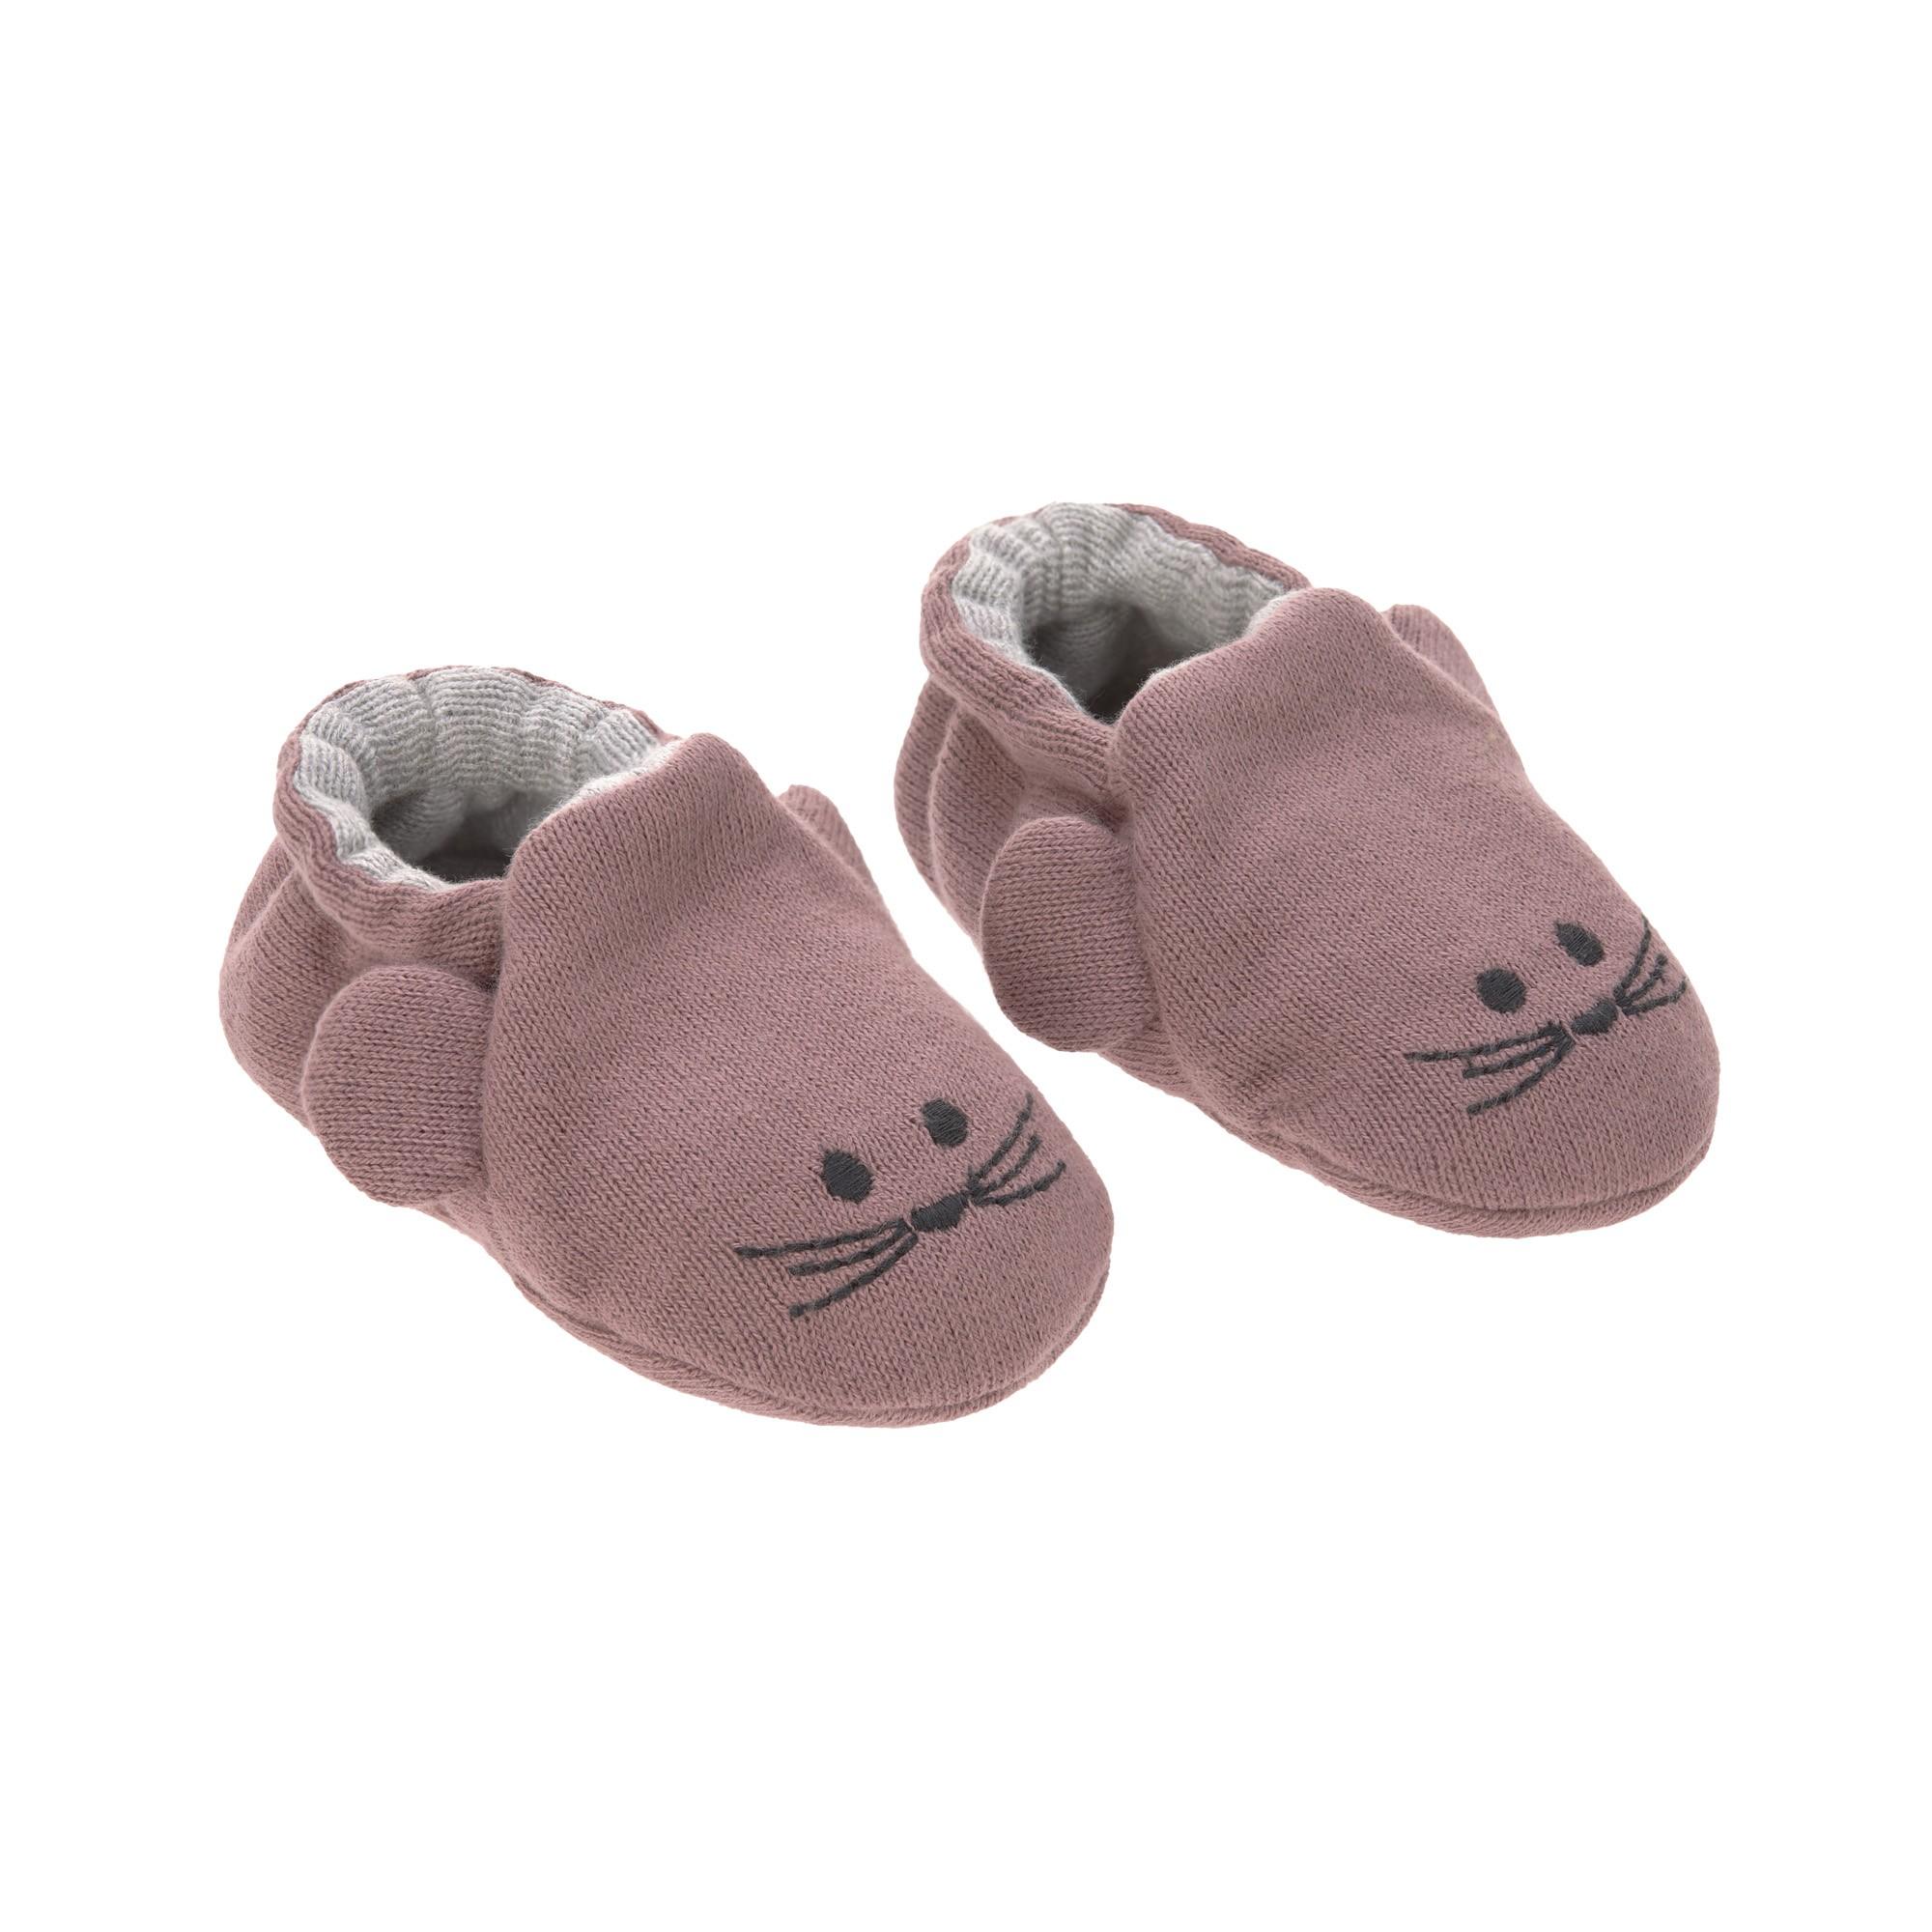 Lassig - Baby shoes gots little chums mouse